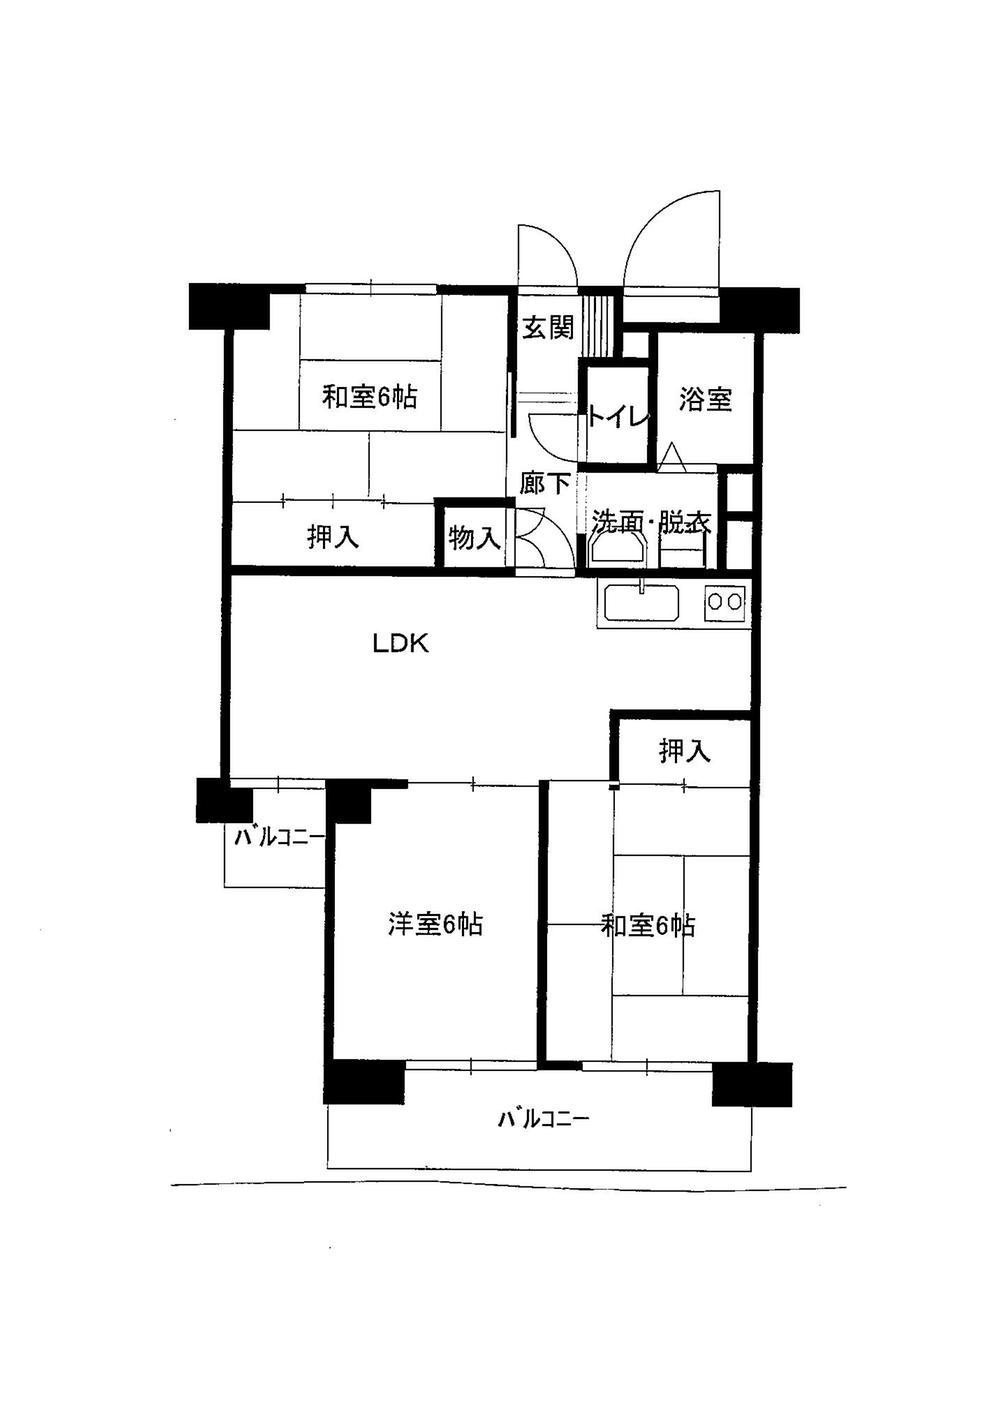 Floor plan. 3LDK, Price 5.6 million yen, Occupied area 65.82 sq m , Balcony area 10.53 sq m